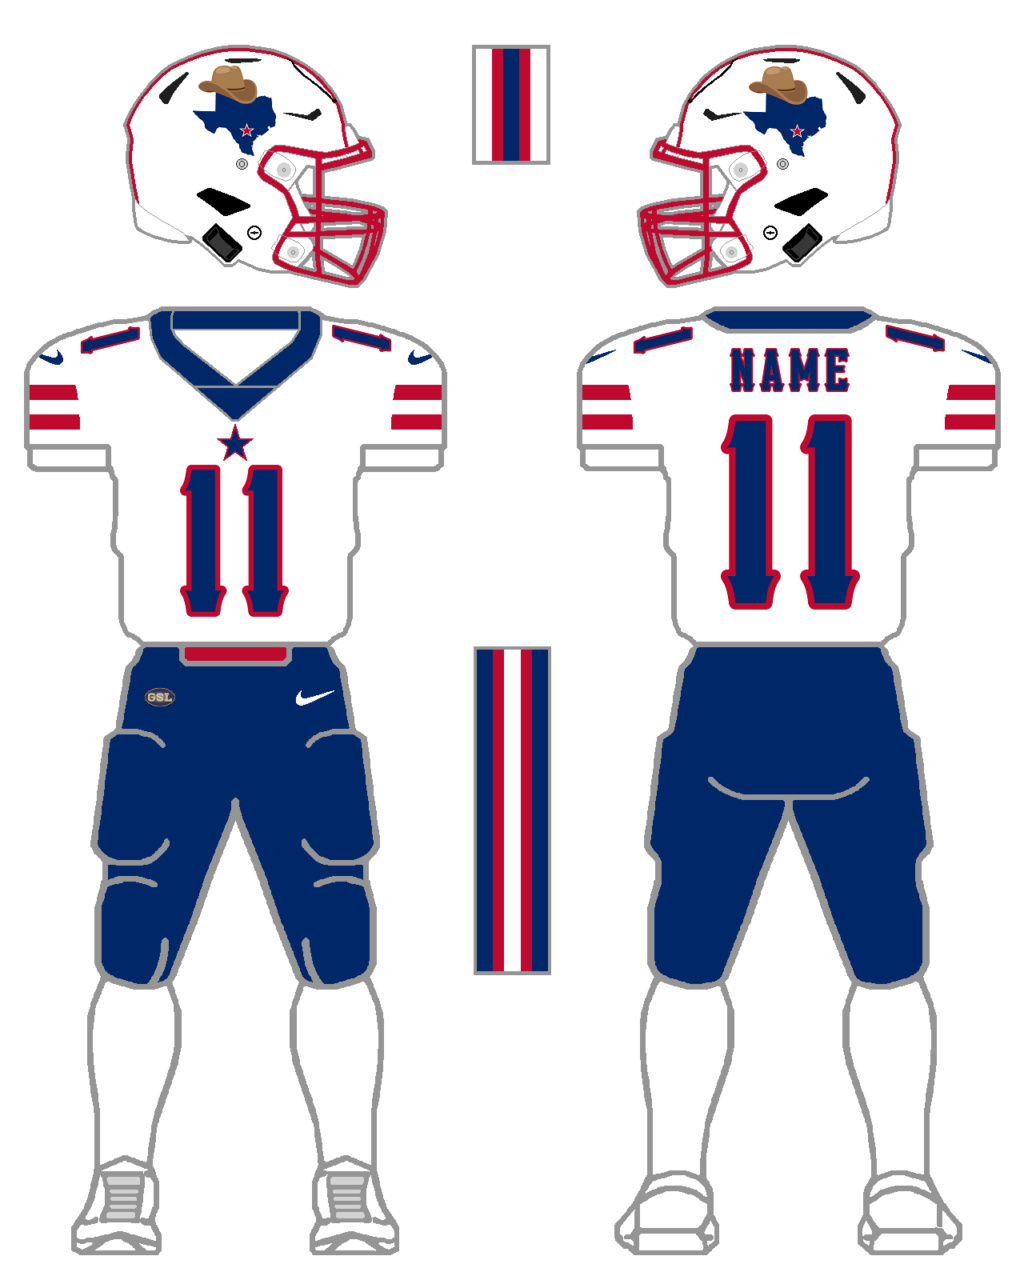 San Antonio's updated uniforms Sa_a212